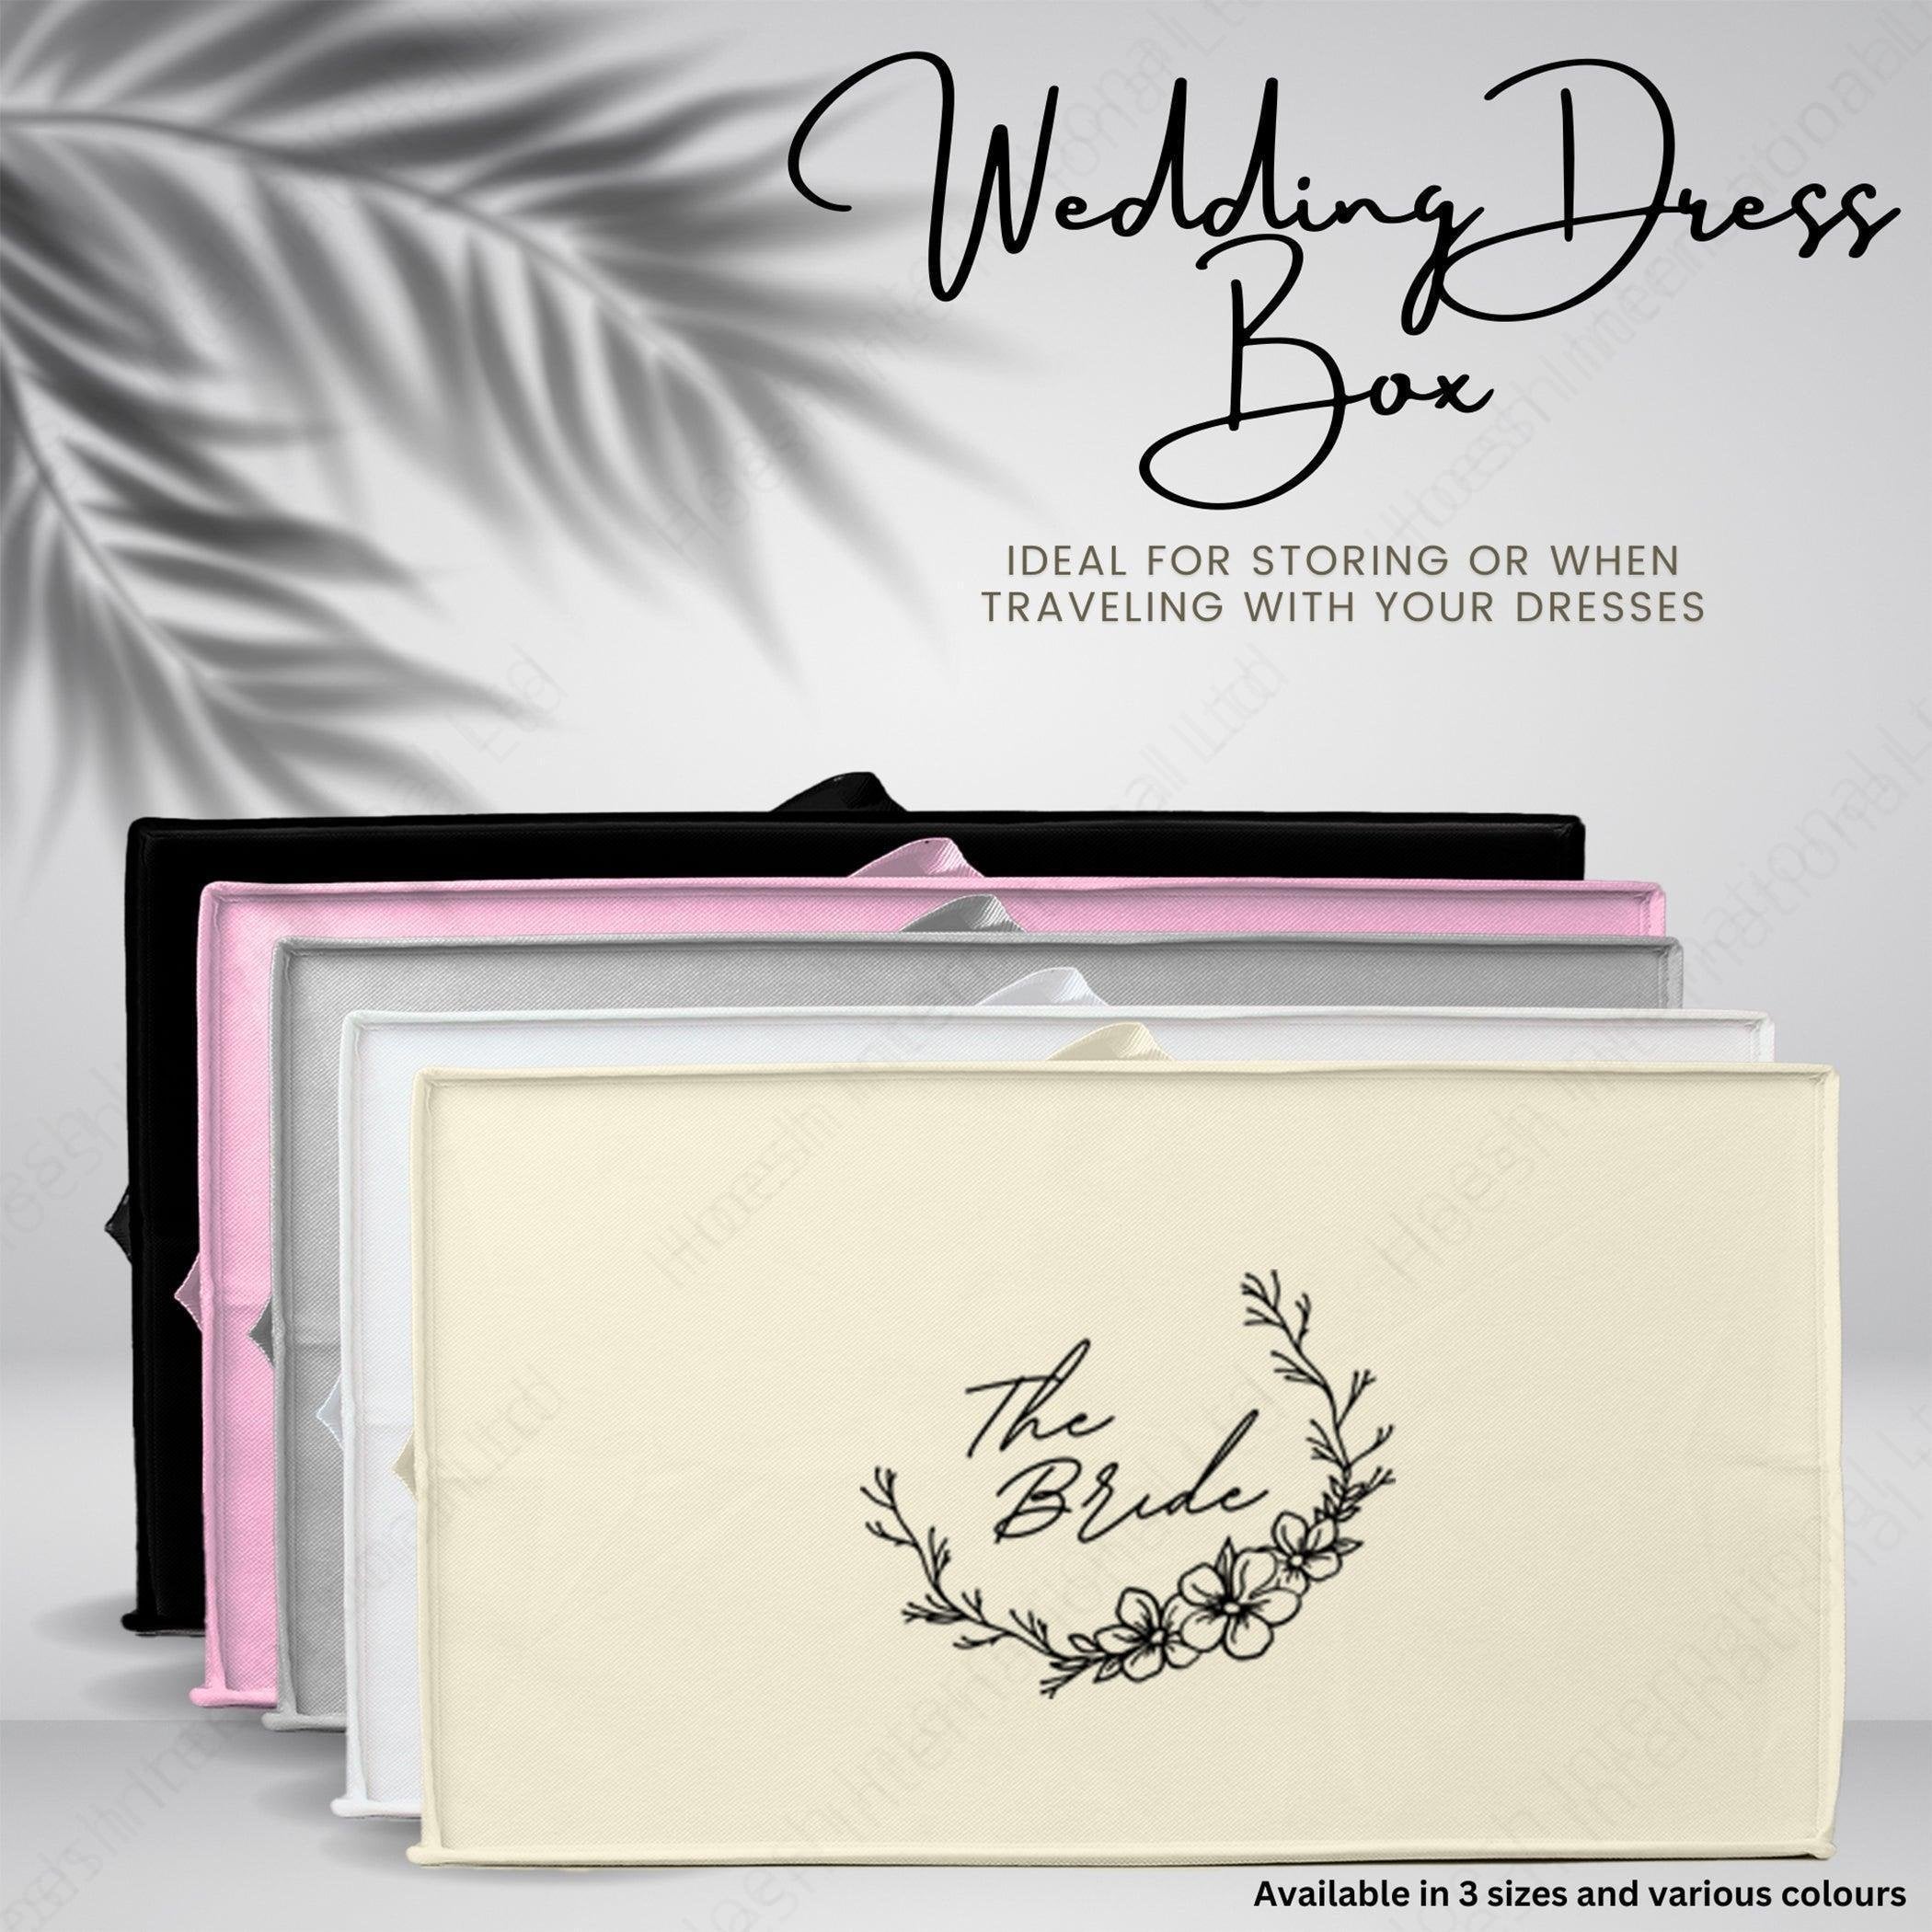 Wedding Dress Storage Box With "THE BRIDE" Floral Wreath - Hoesh International Ltd